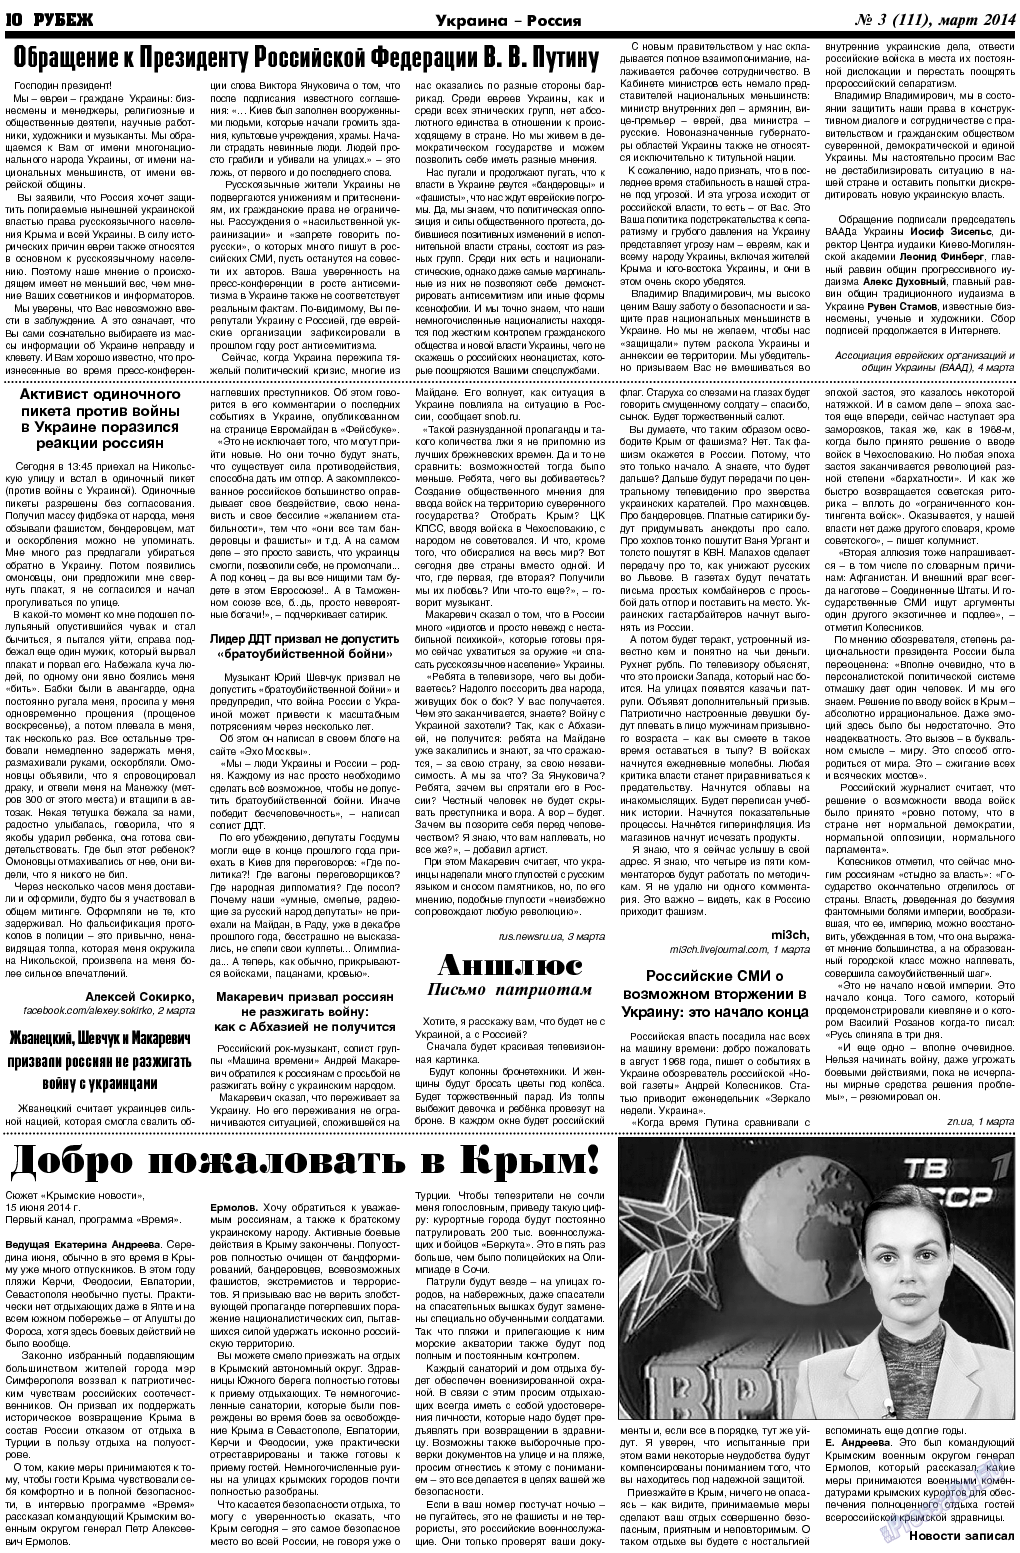 Рубеж, газета. 2014 №3 стр.10